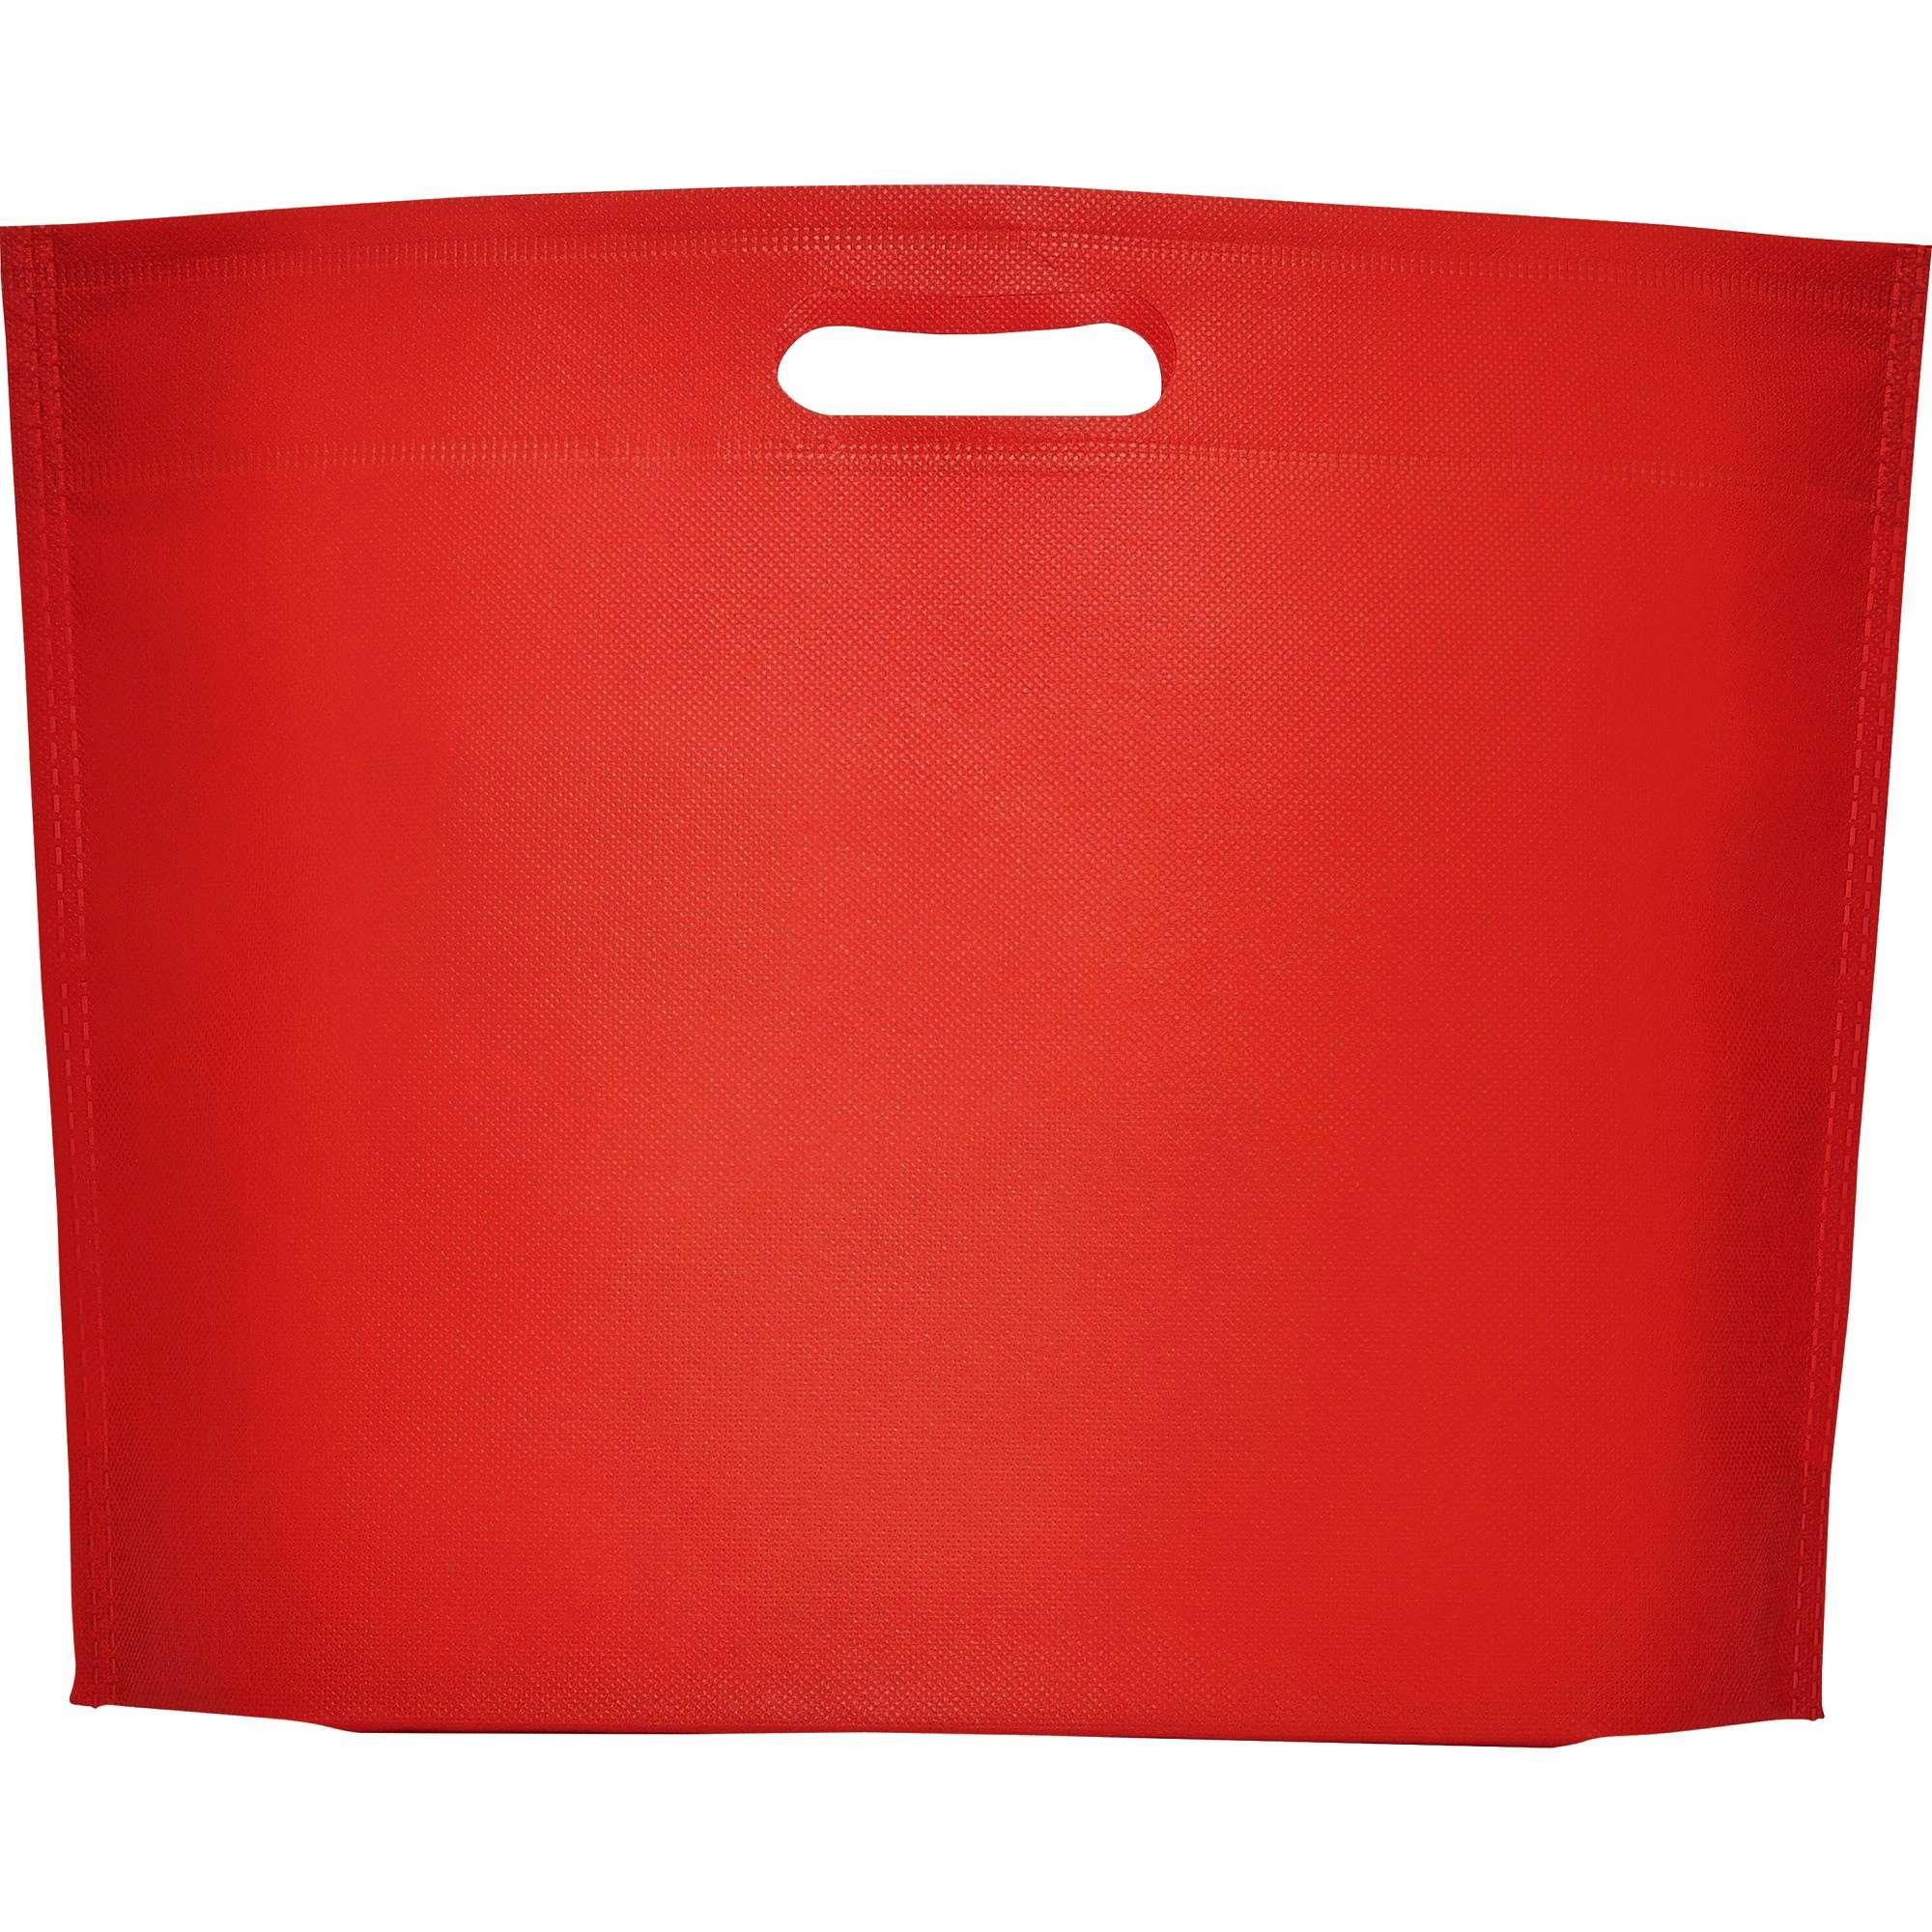 Stamina Ocean Bag Red 60 40 x 30 x 10 cm (RY7501)